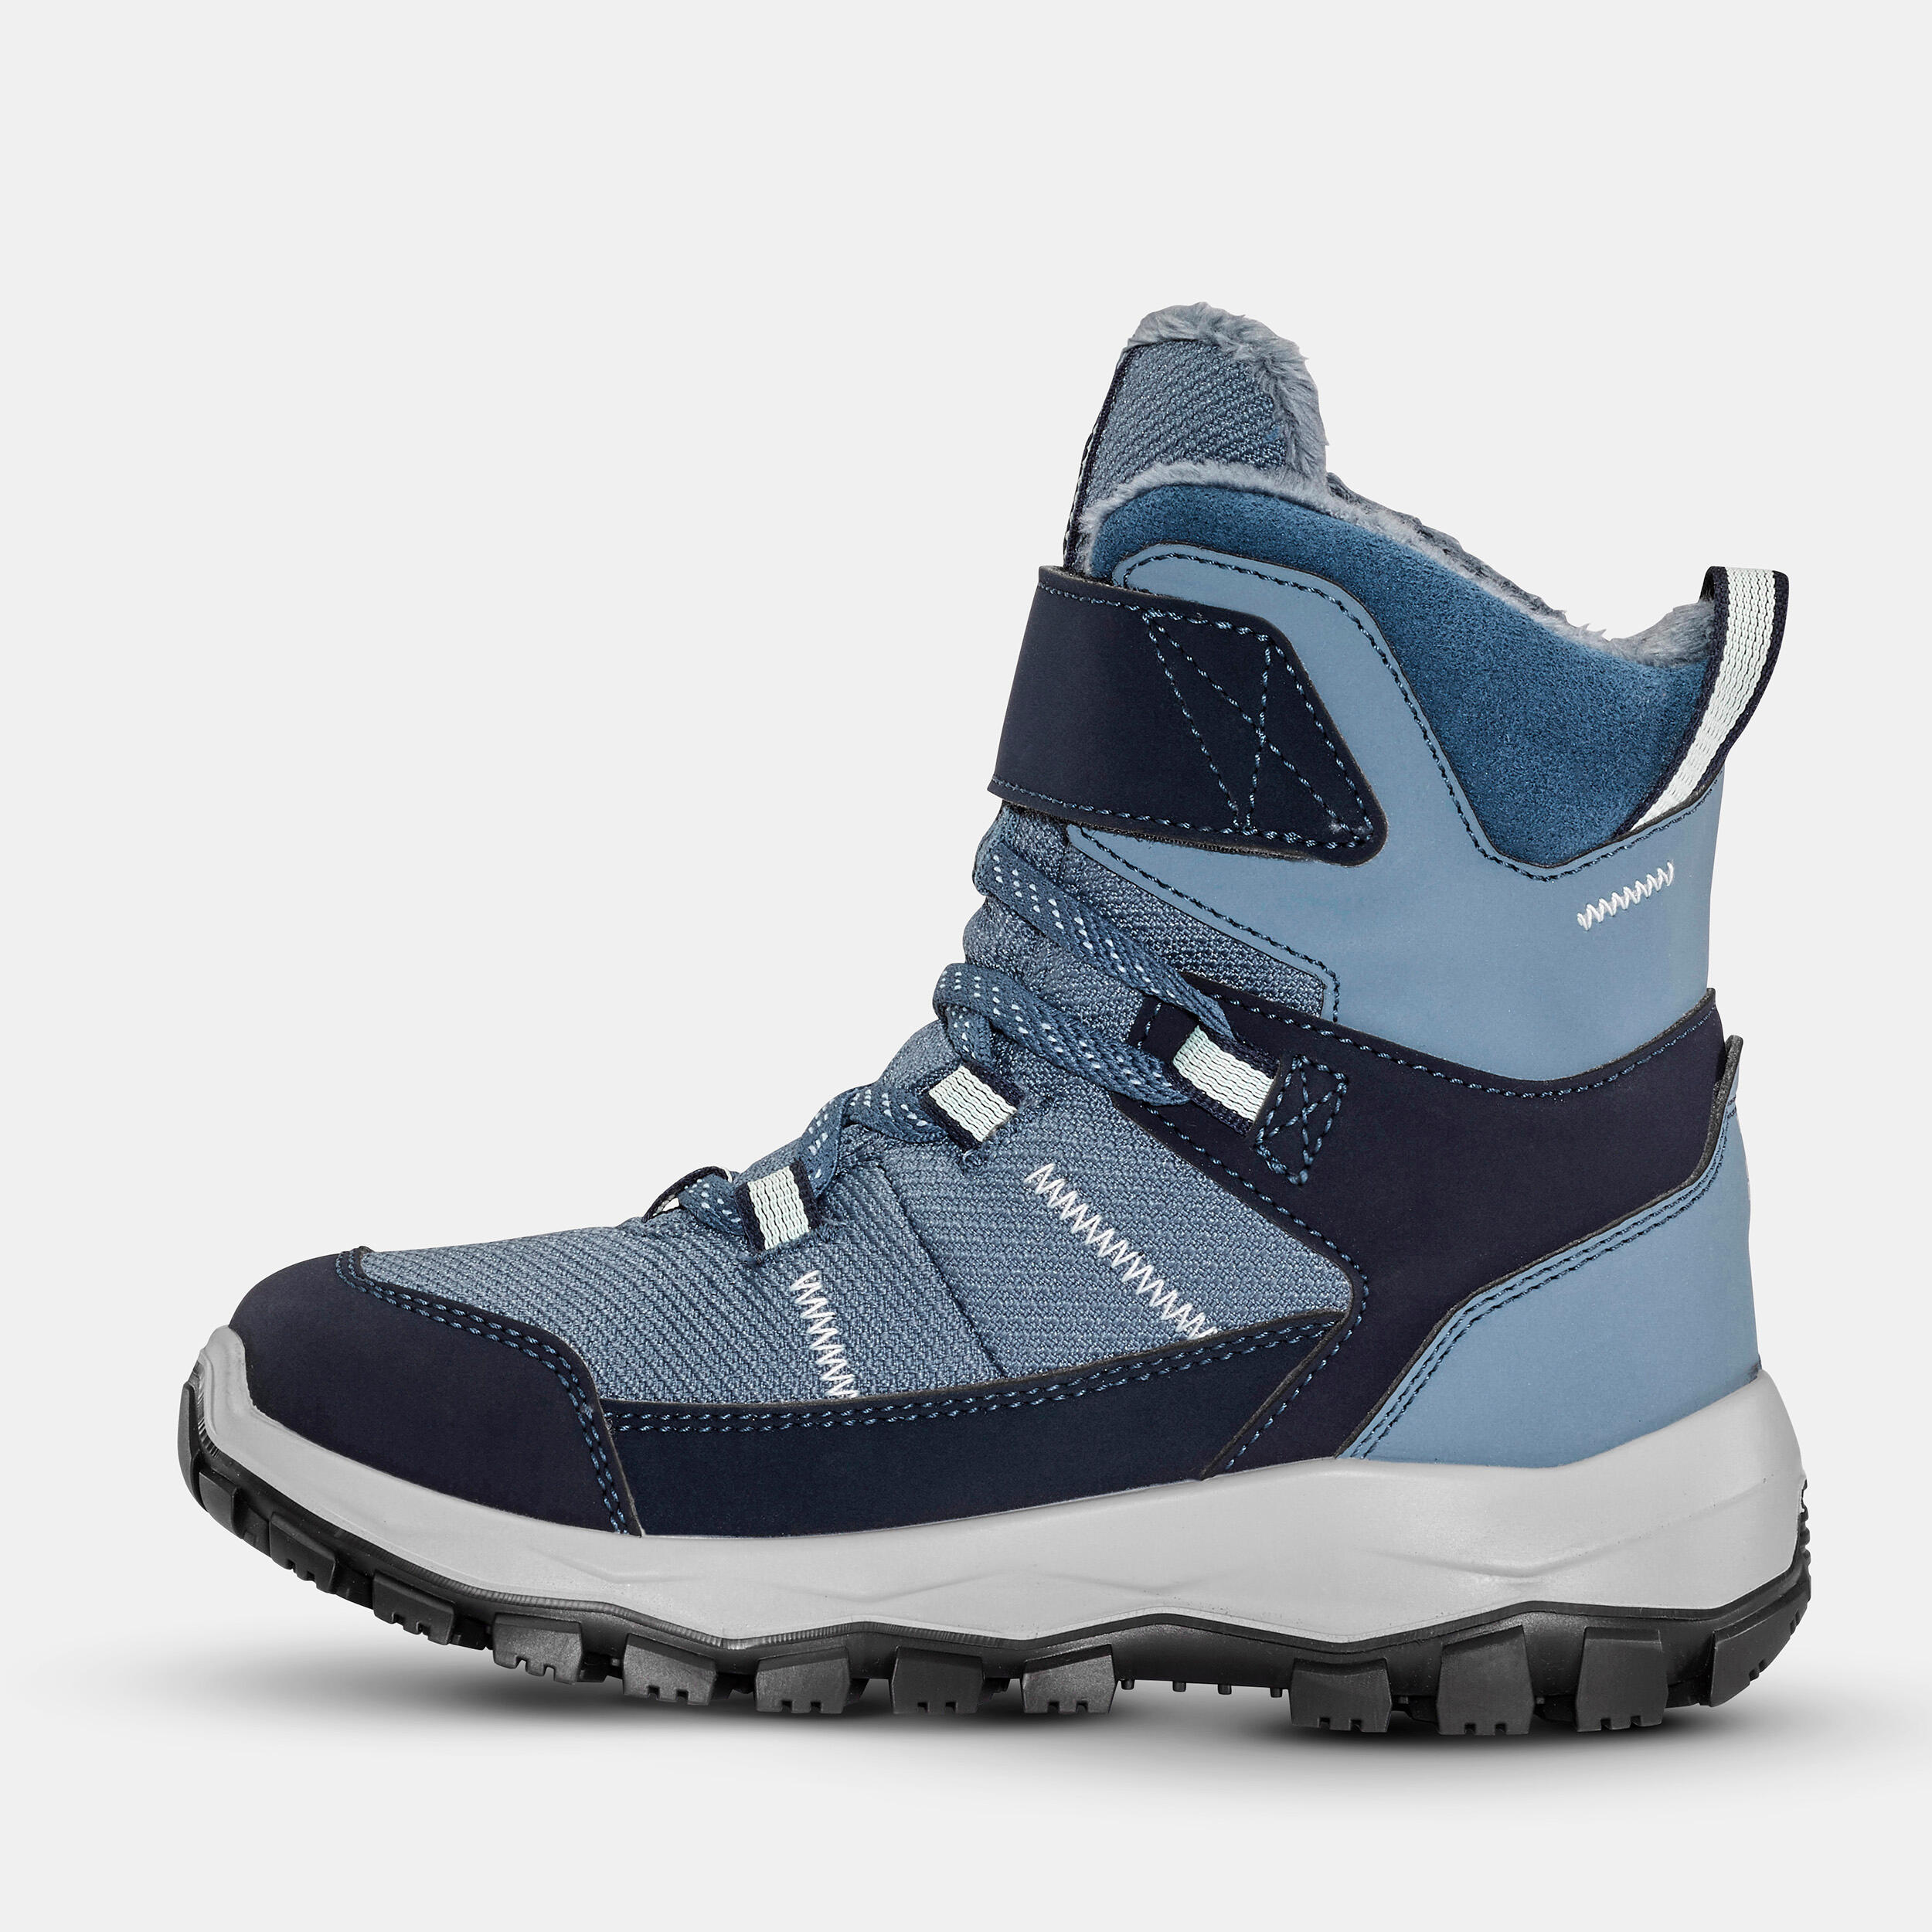 Children's warm waterproof hiking boots - SH500 MTN Velcro - Size 7J - 2 3/6